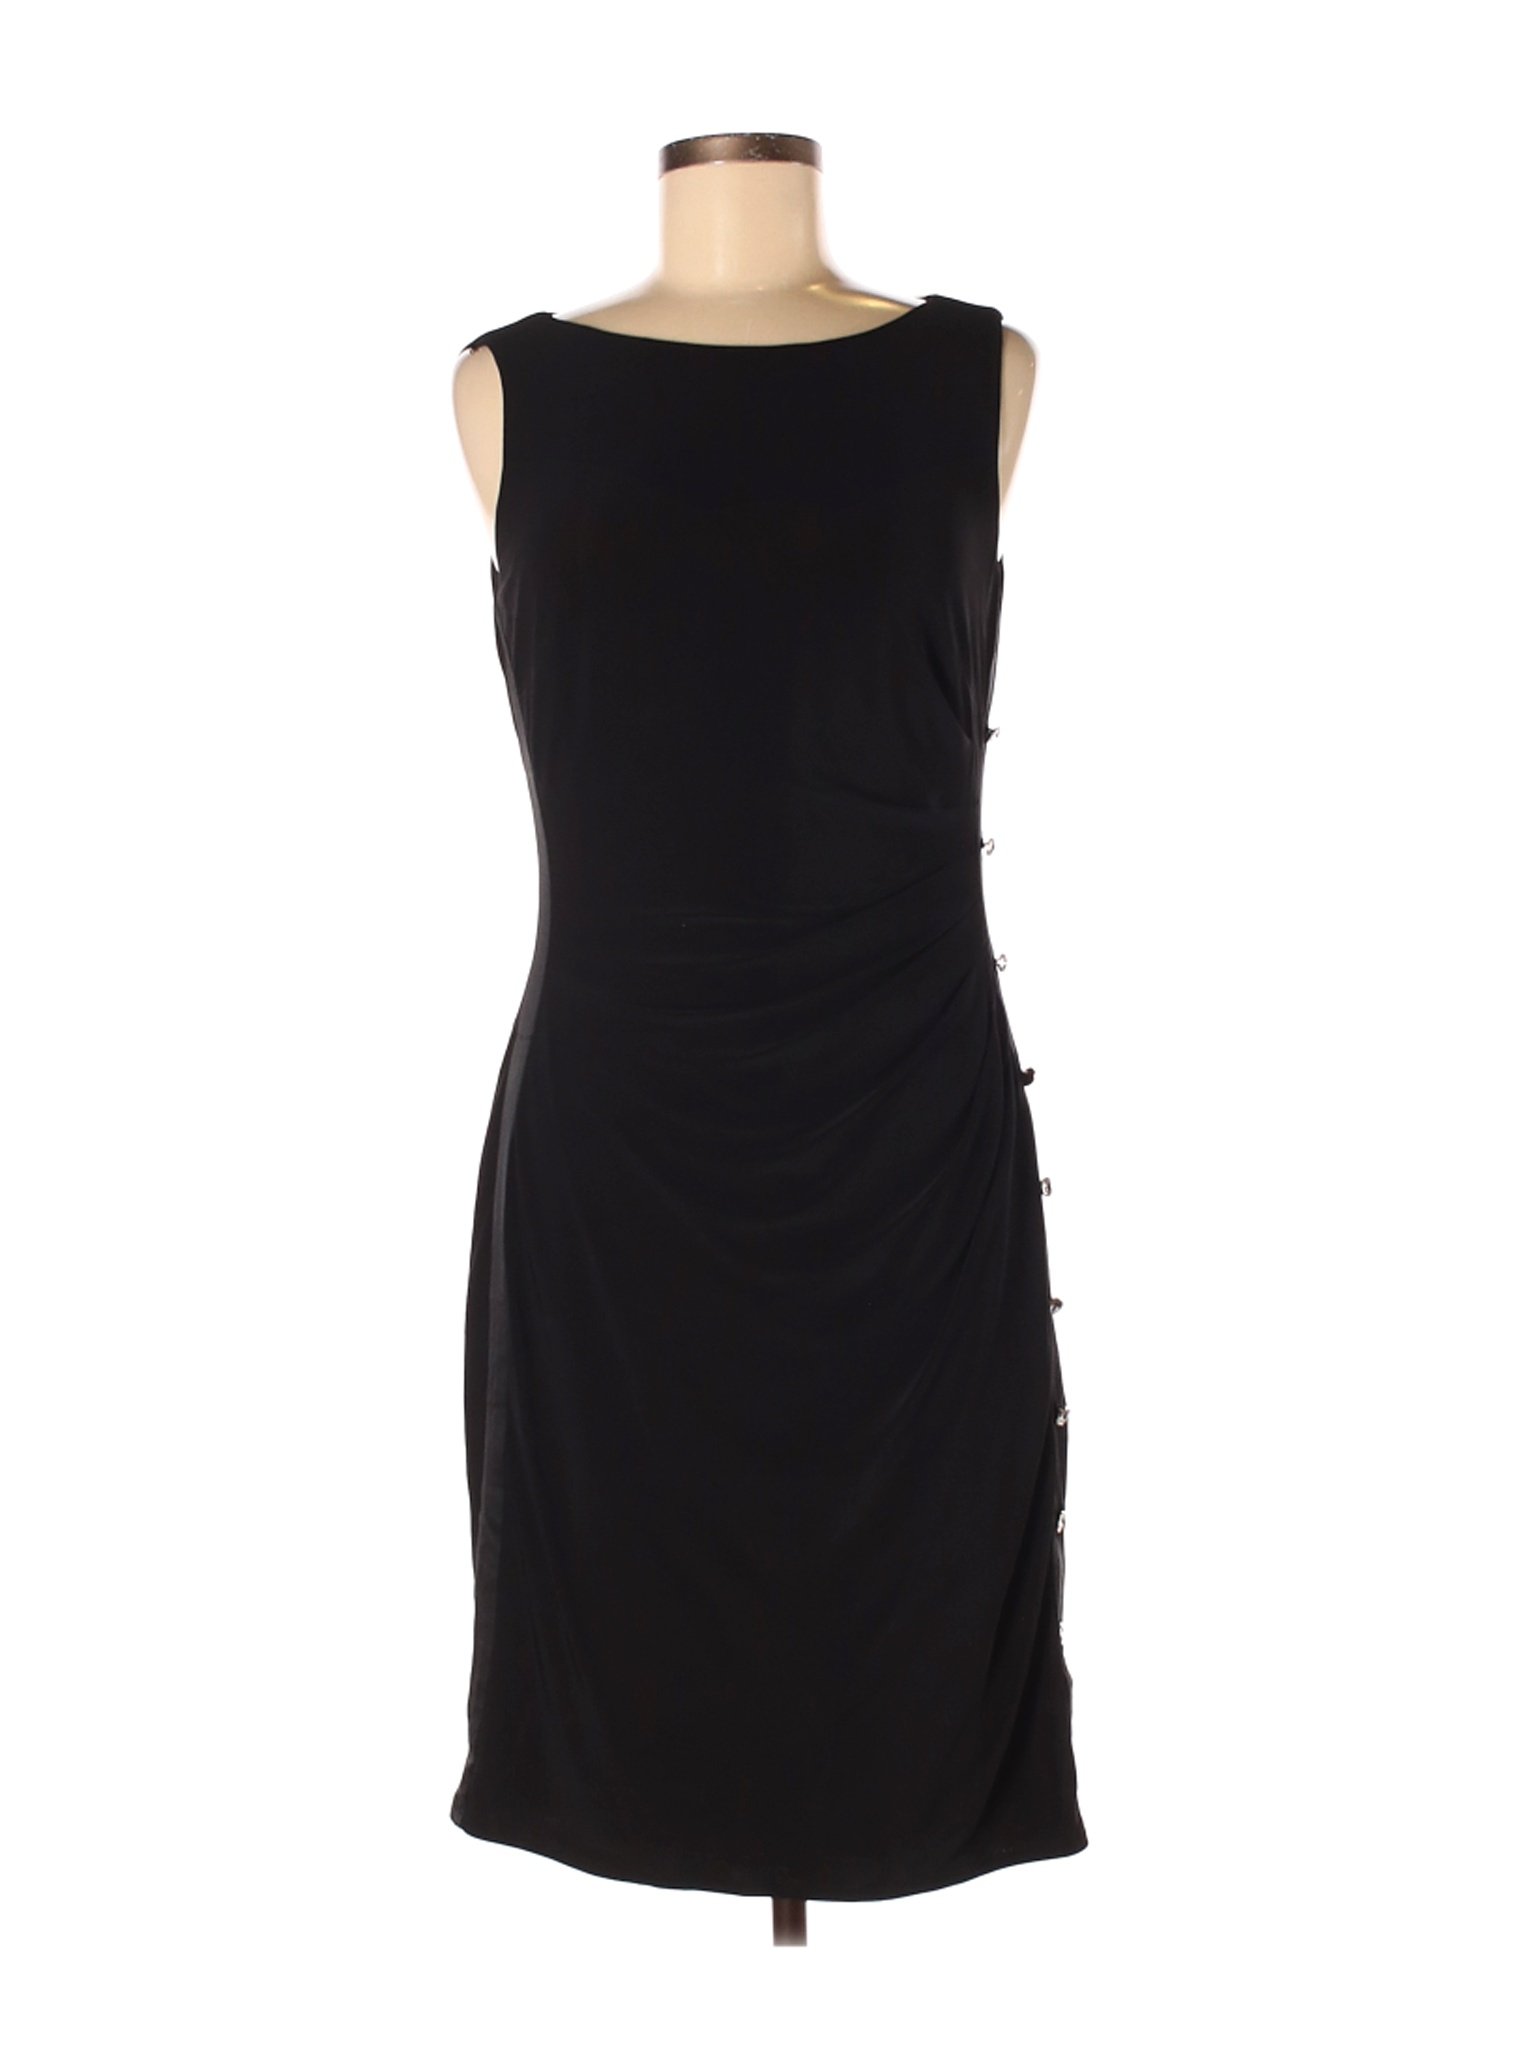 Lauren by Ralph Lauren Women Black Cocktail Dress 8 | eBay